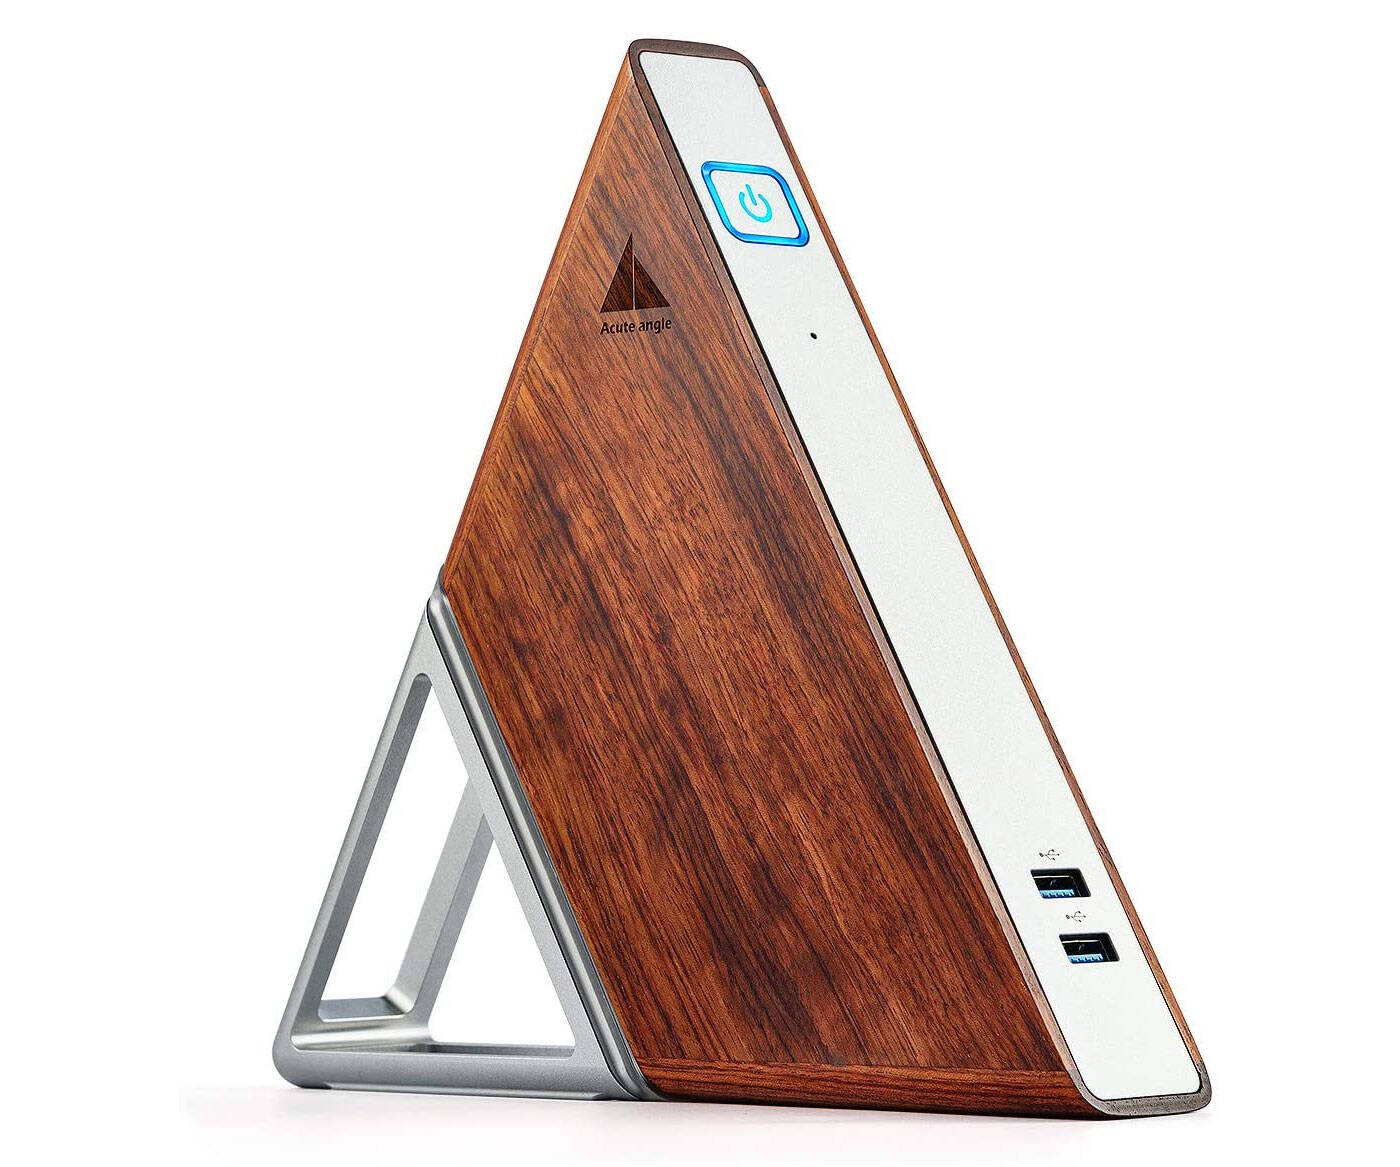 Triangular Portable Pro Desktop PC - coolthings.us